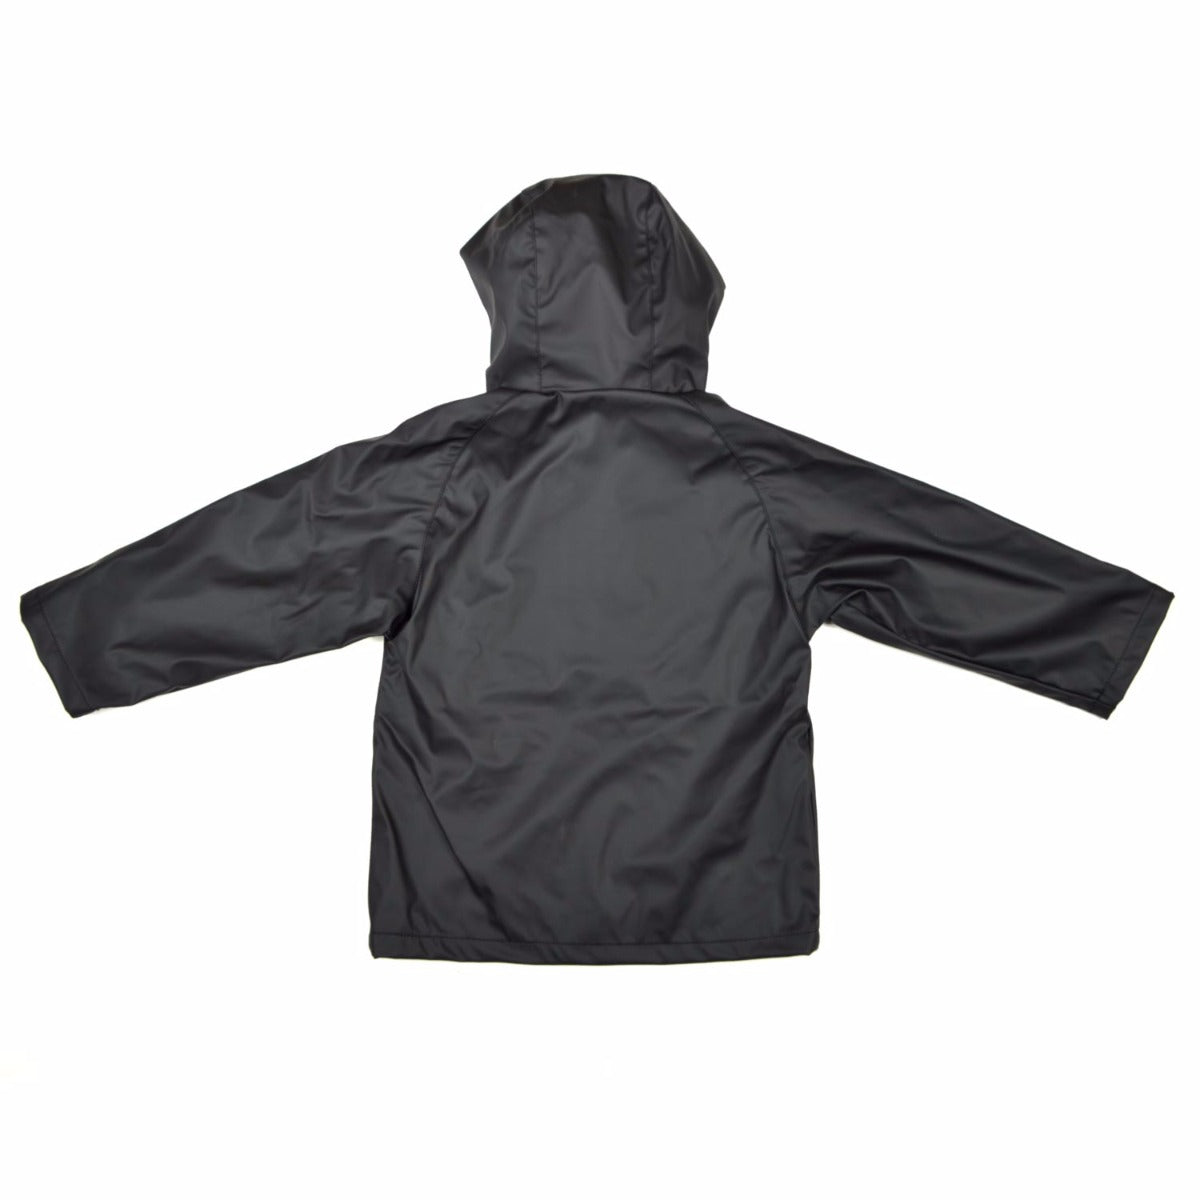 WelliesAU Black Rainy Days Raincoat